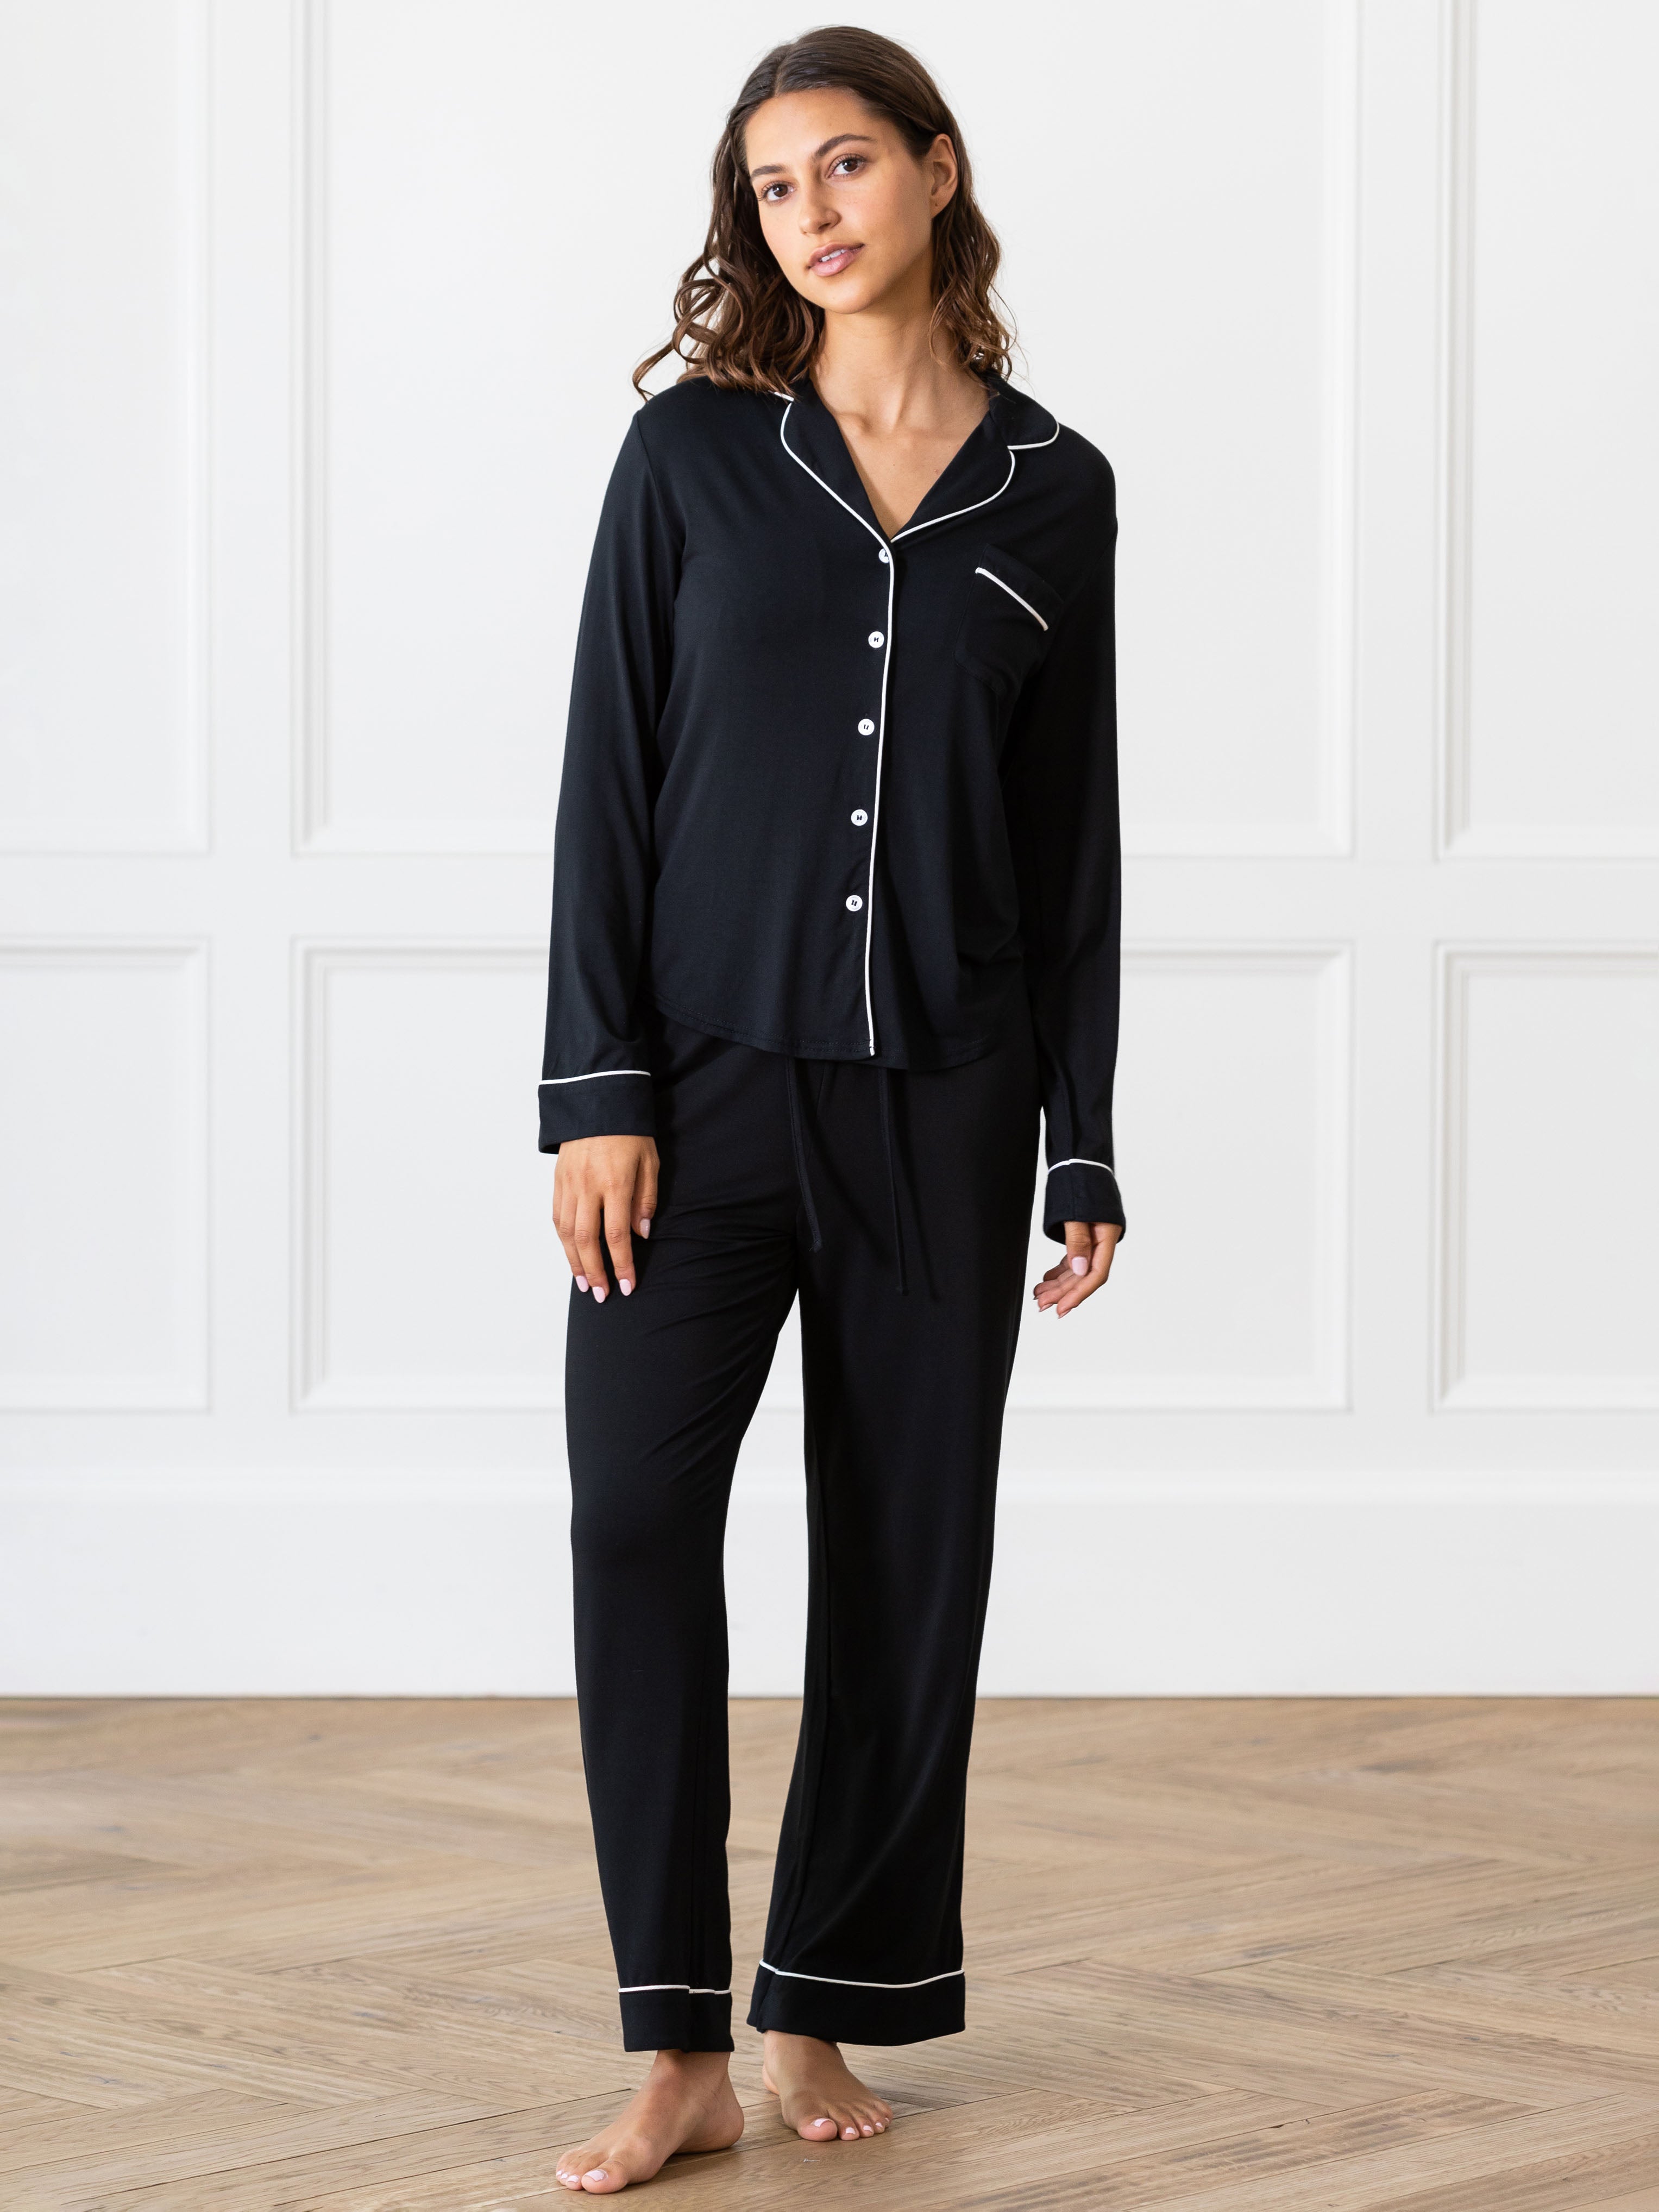 Buy Womens Pyjama Sets Canada 100 Silk Sleepwear